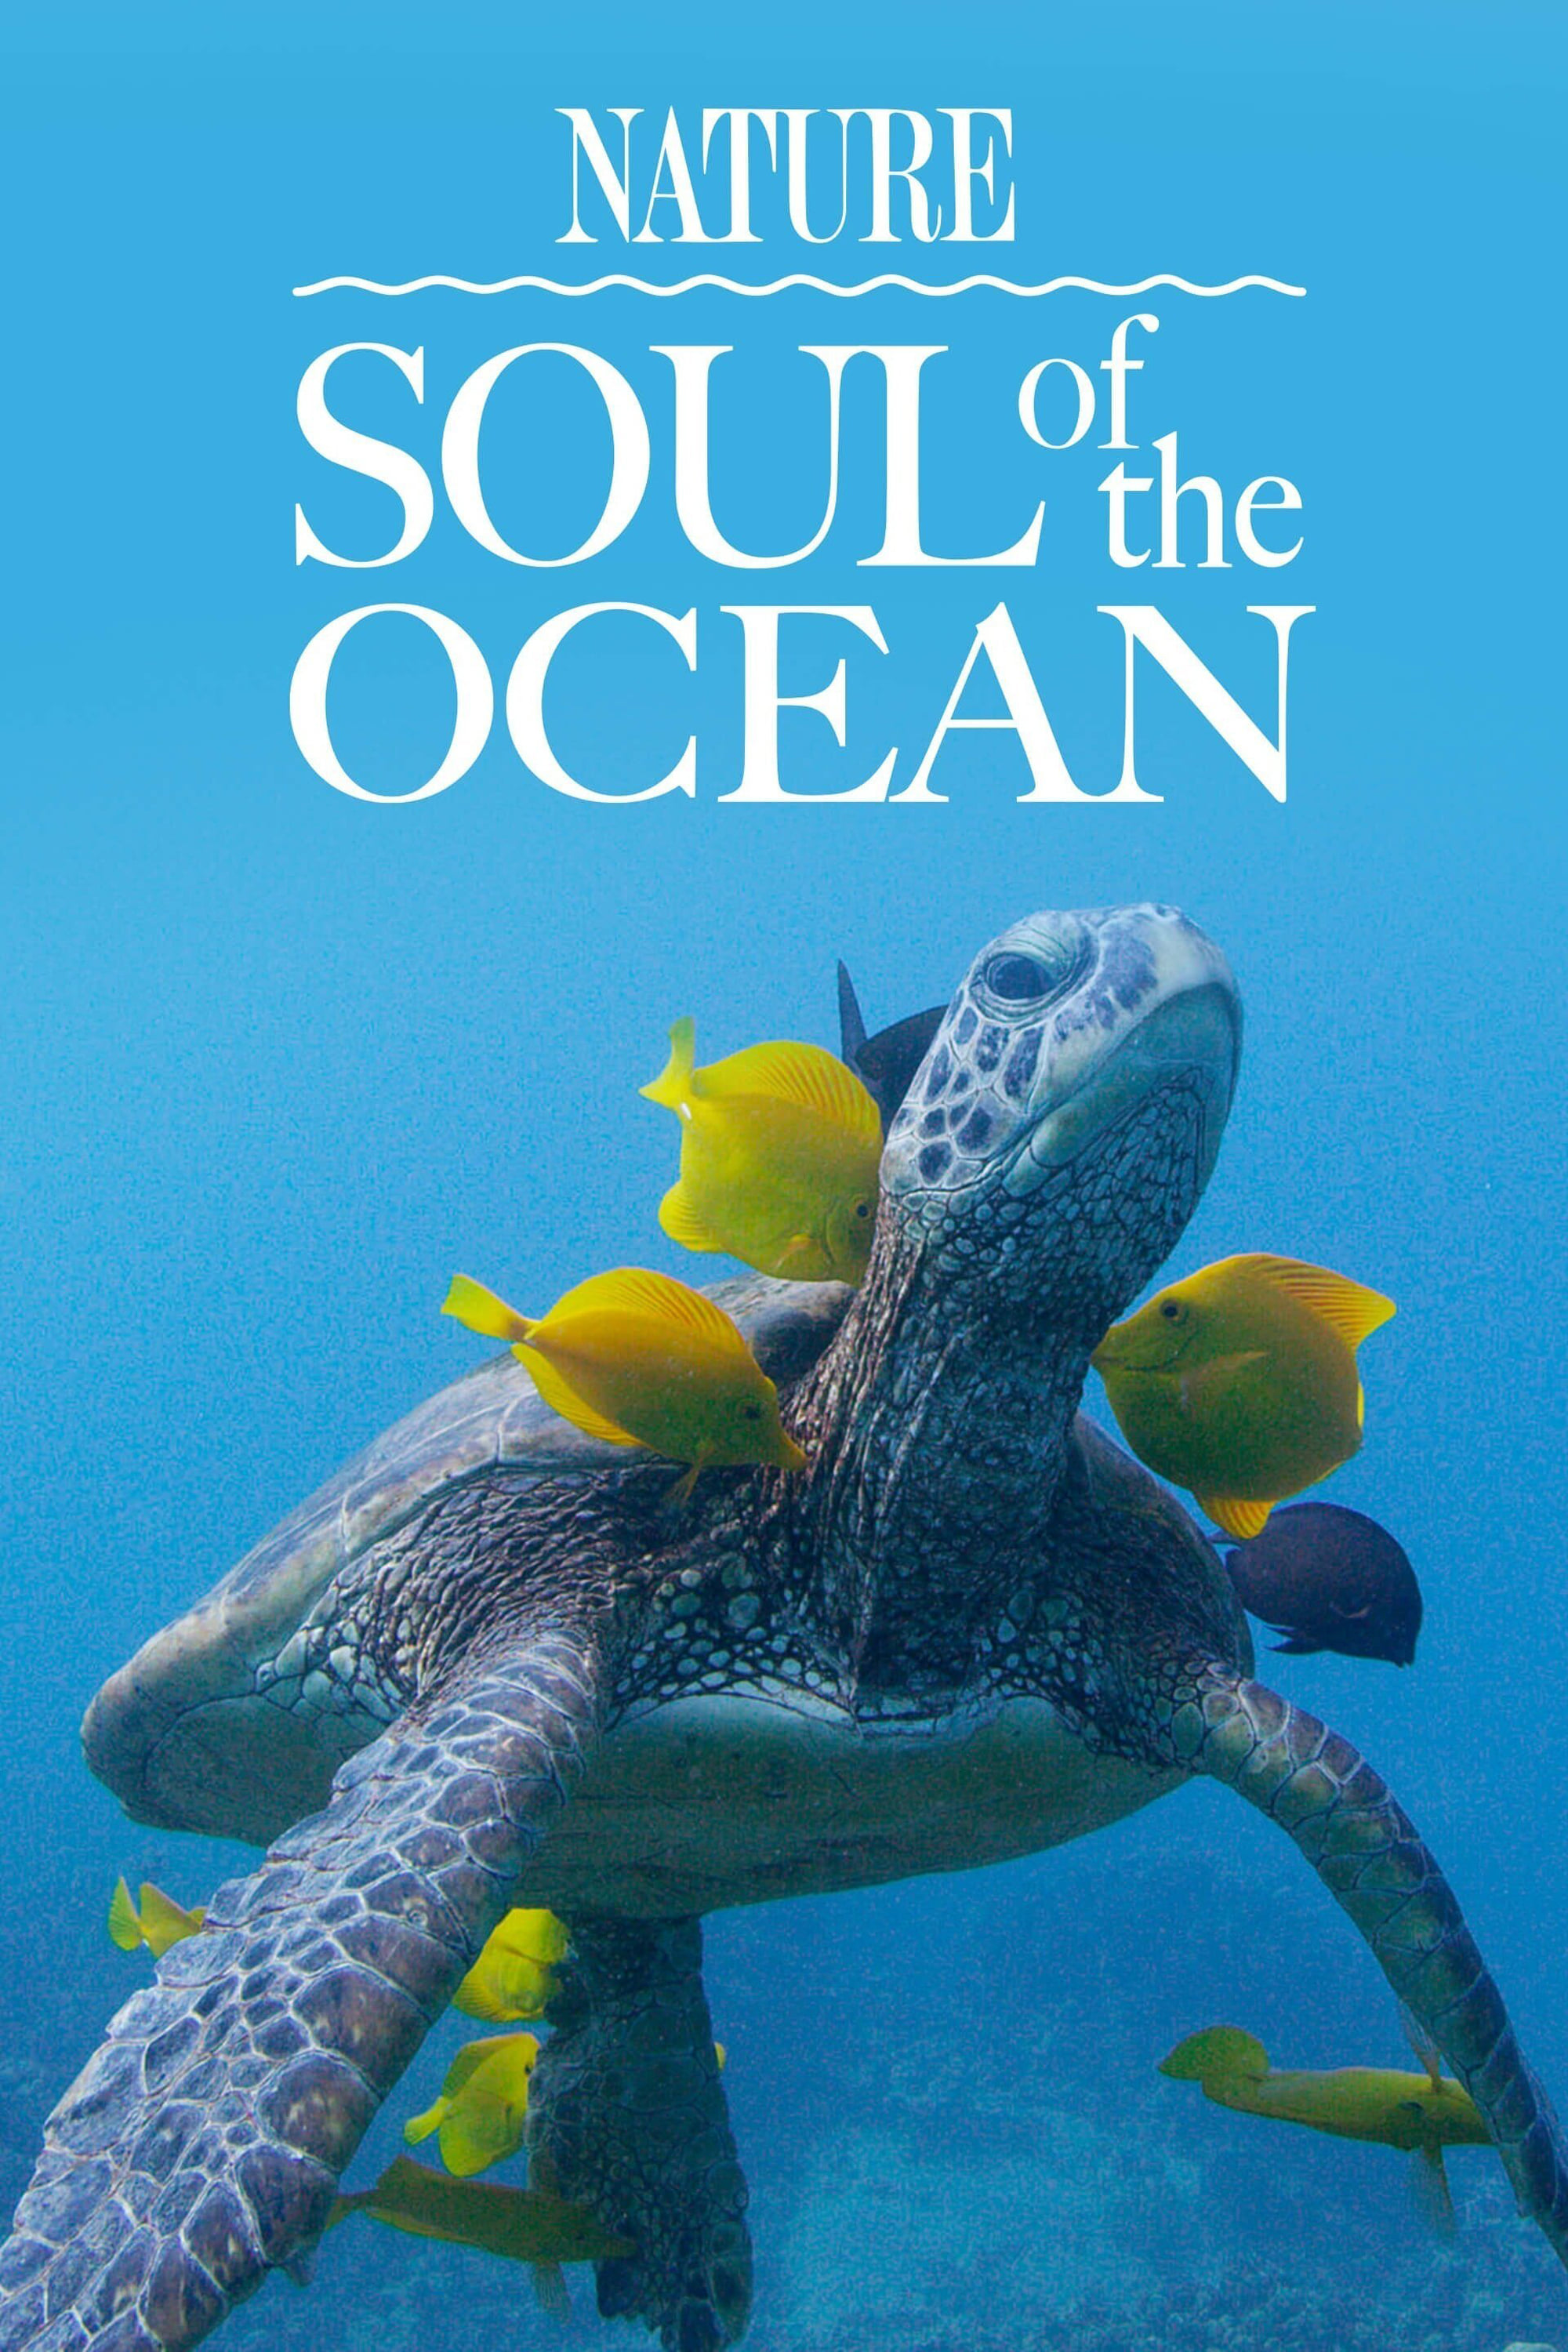 Soul of the Ocean